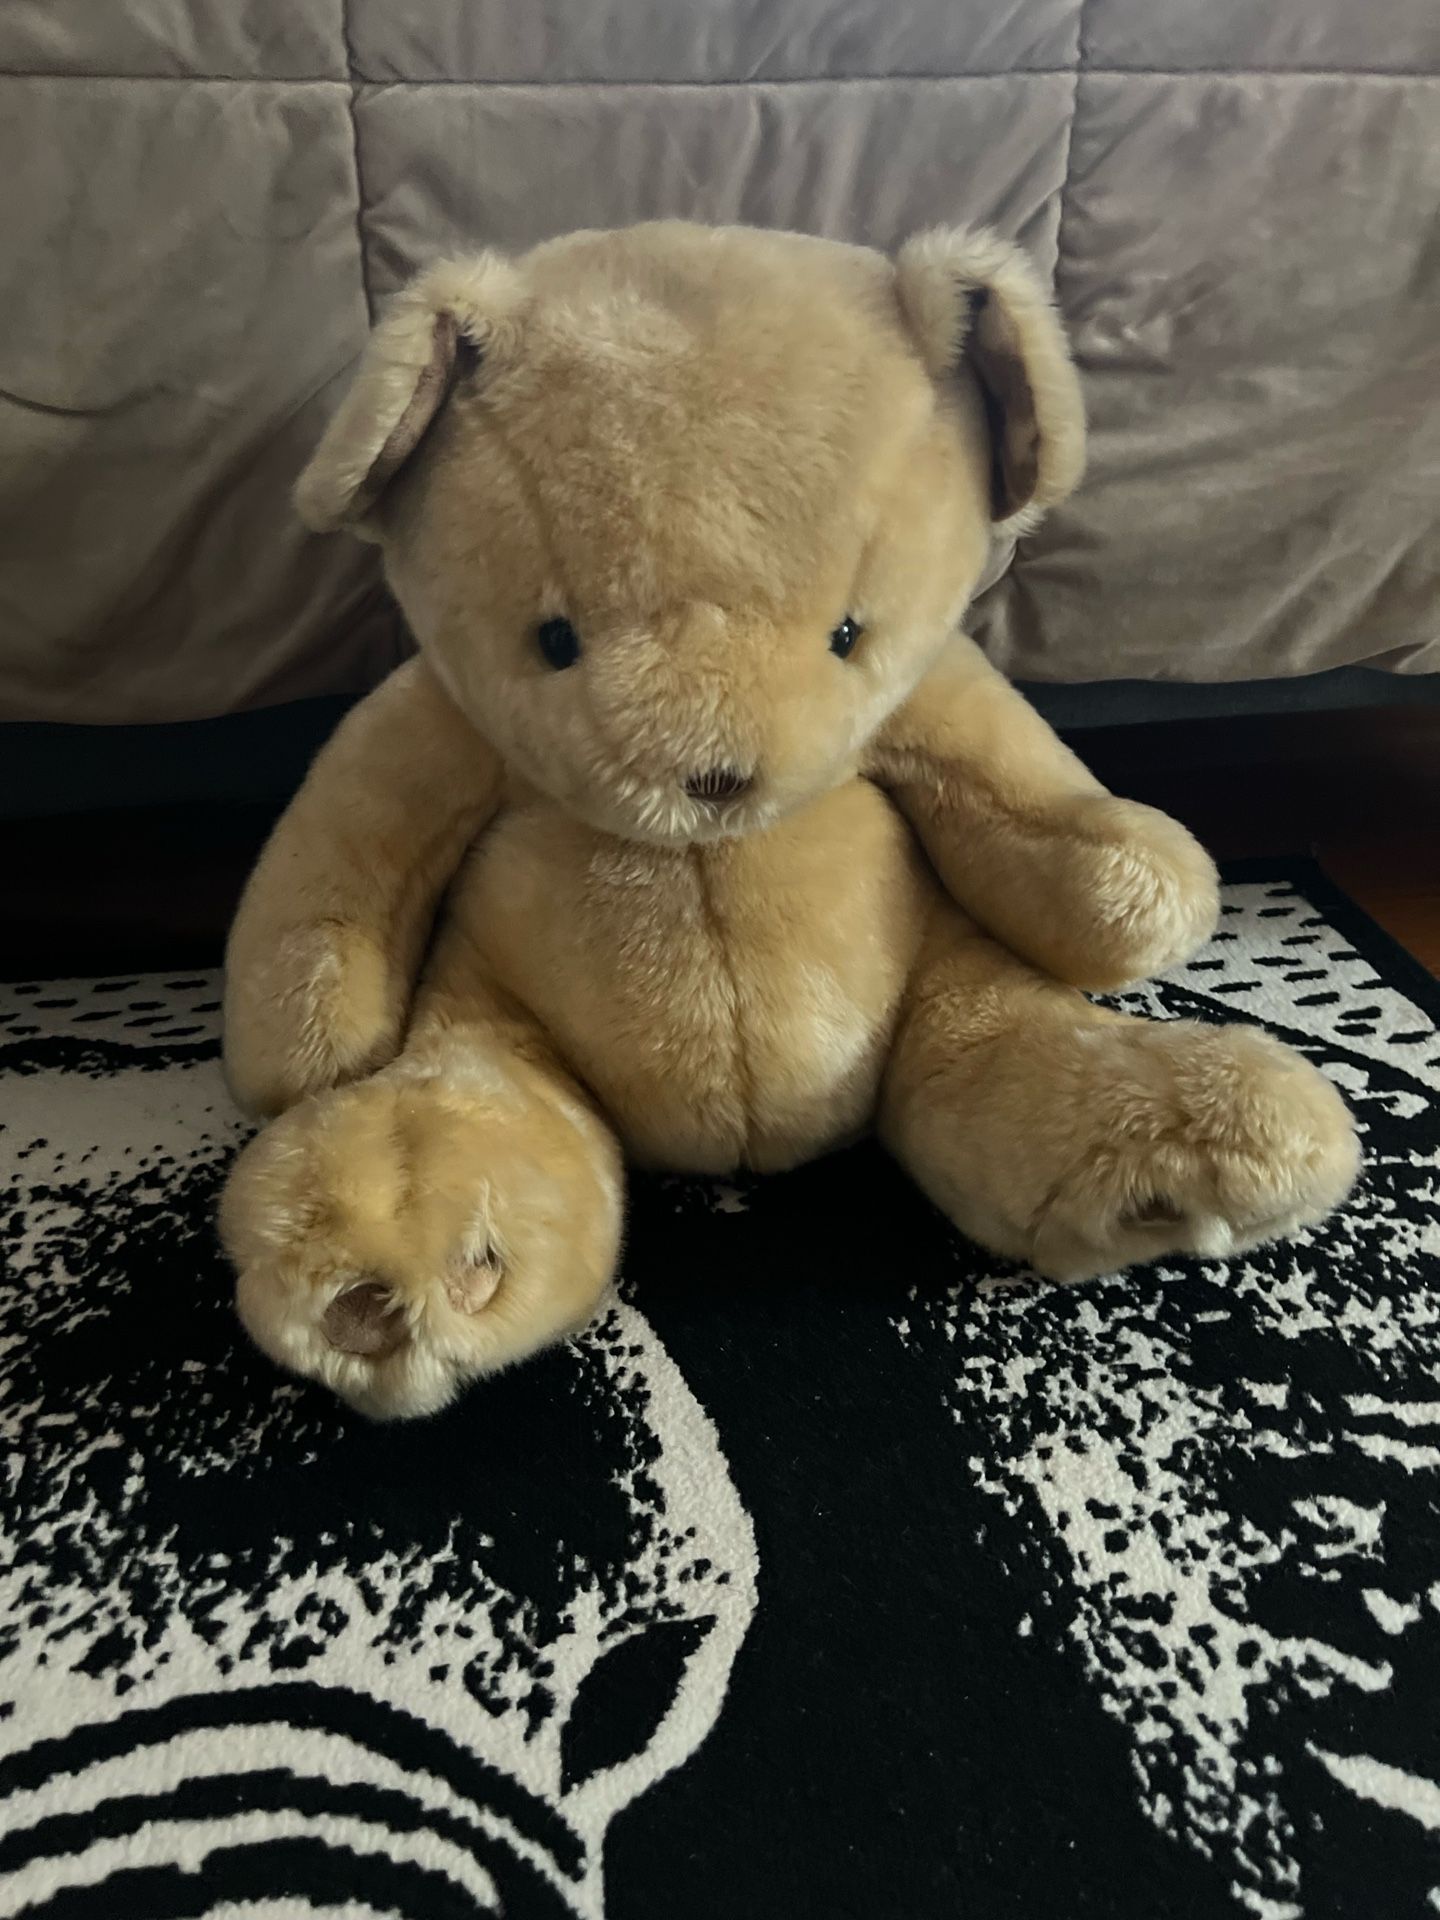 Stuffed Teddy Bear 2 Ft 